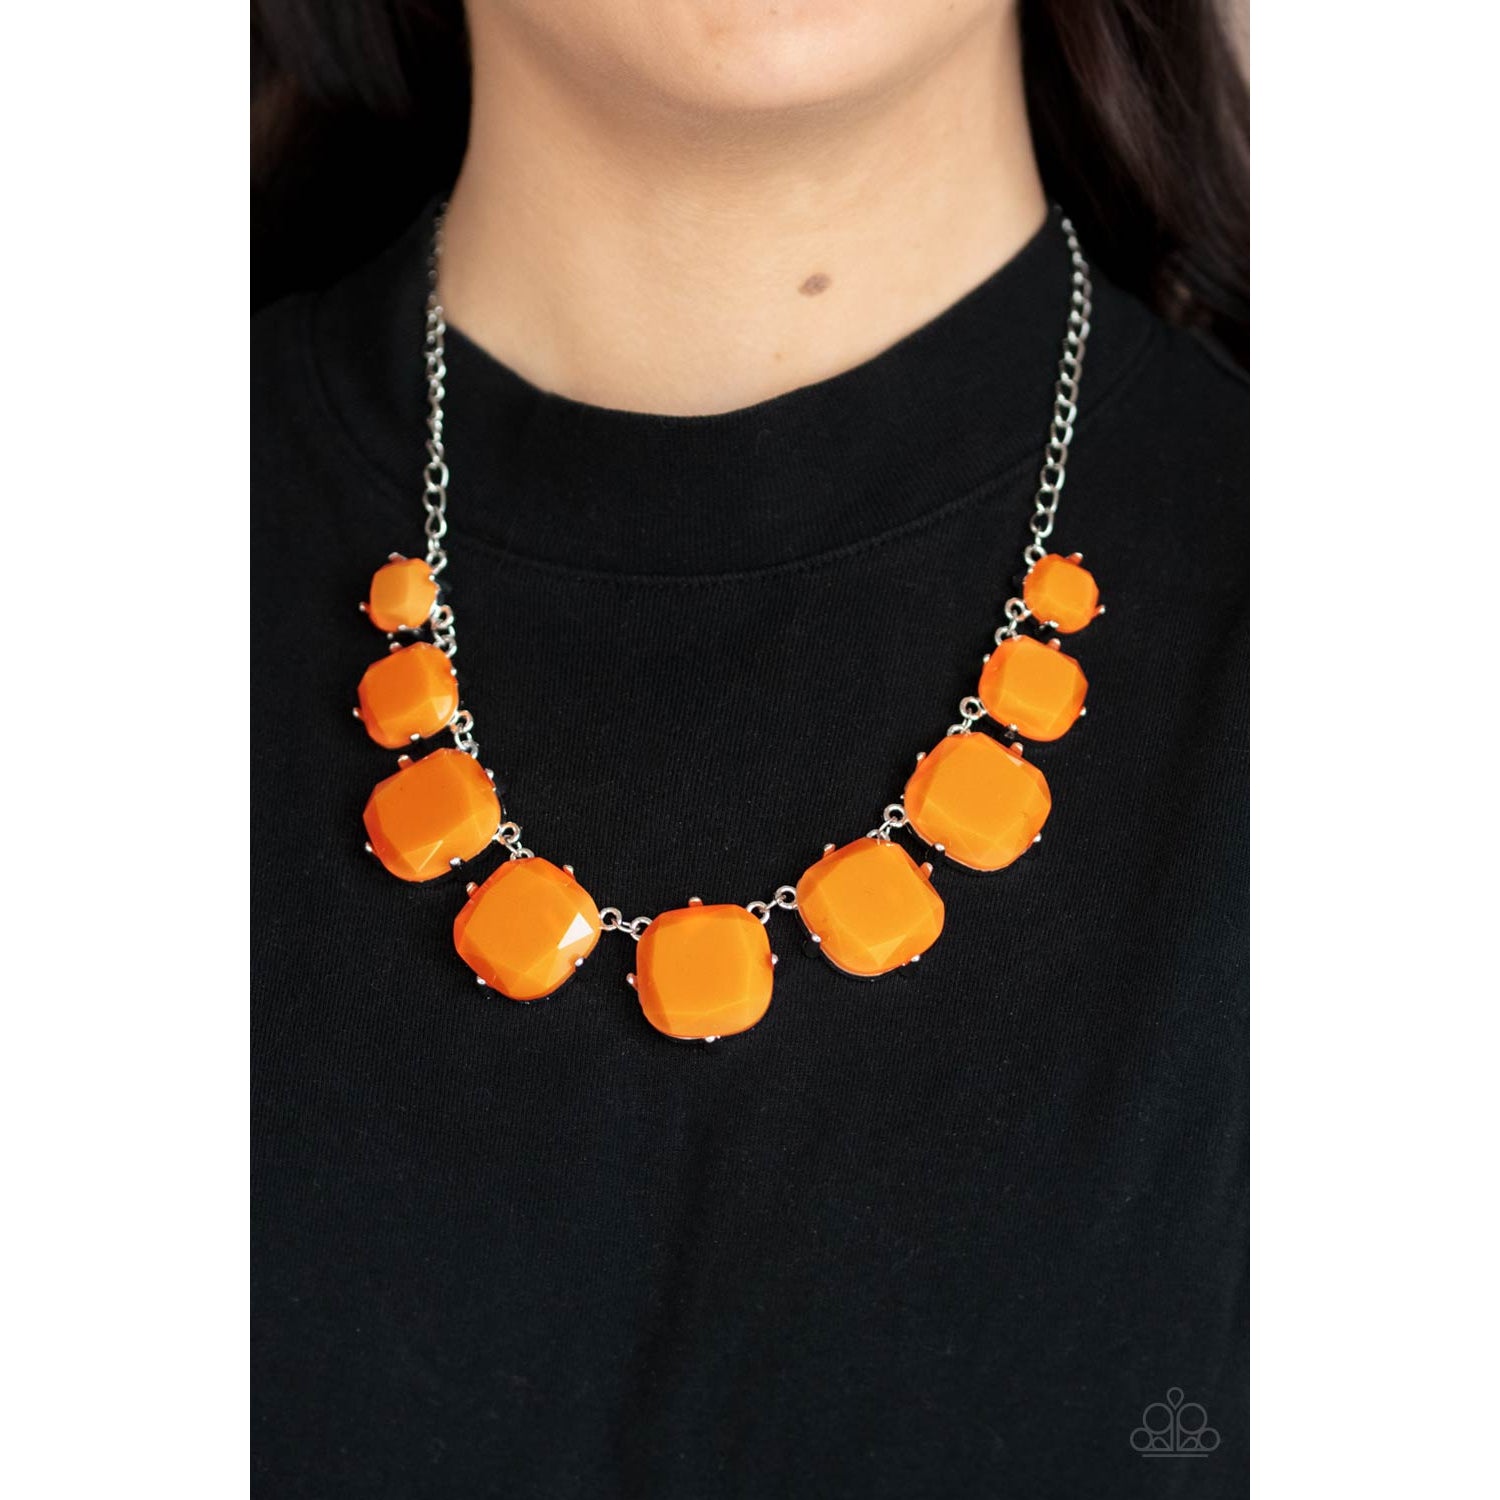 Prismatic Prima Donna - Orange Necklace - Paparazzi Accessories - GlaMarous Titi Jewels